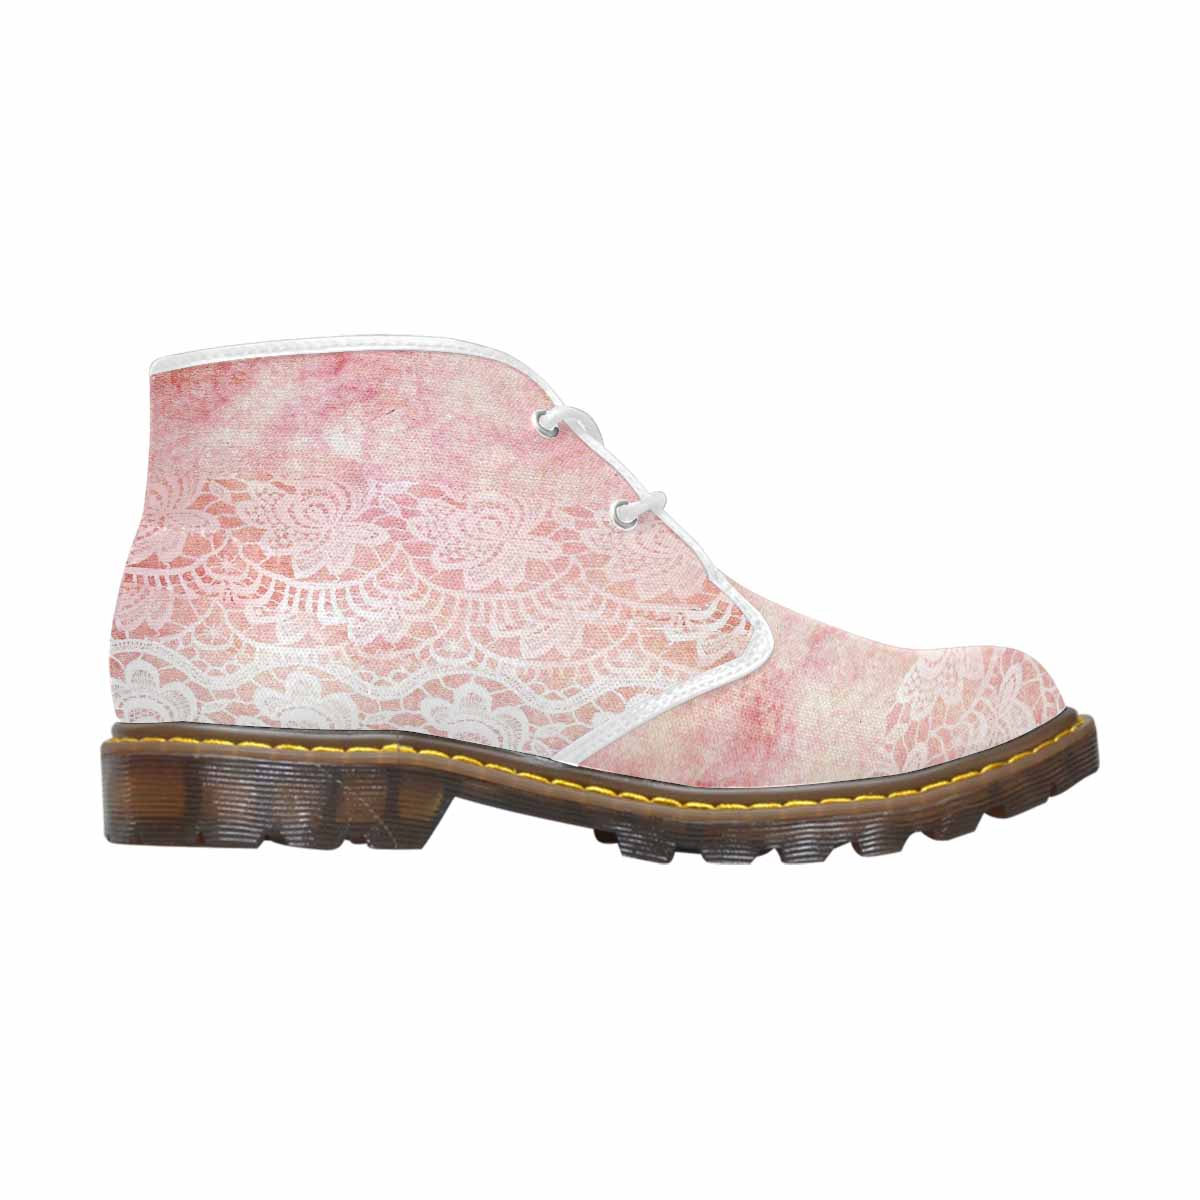 Lace Print, Cute comfy womens Chukka boots, design 38